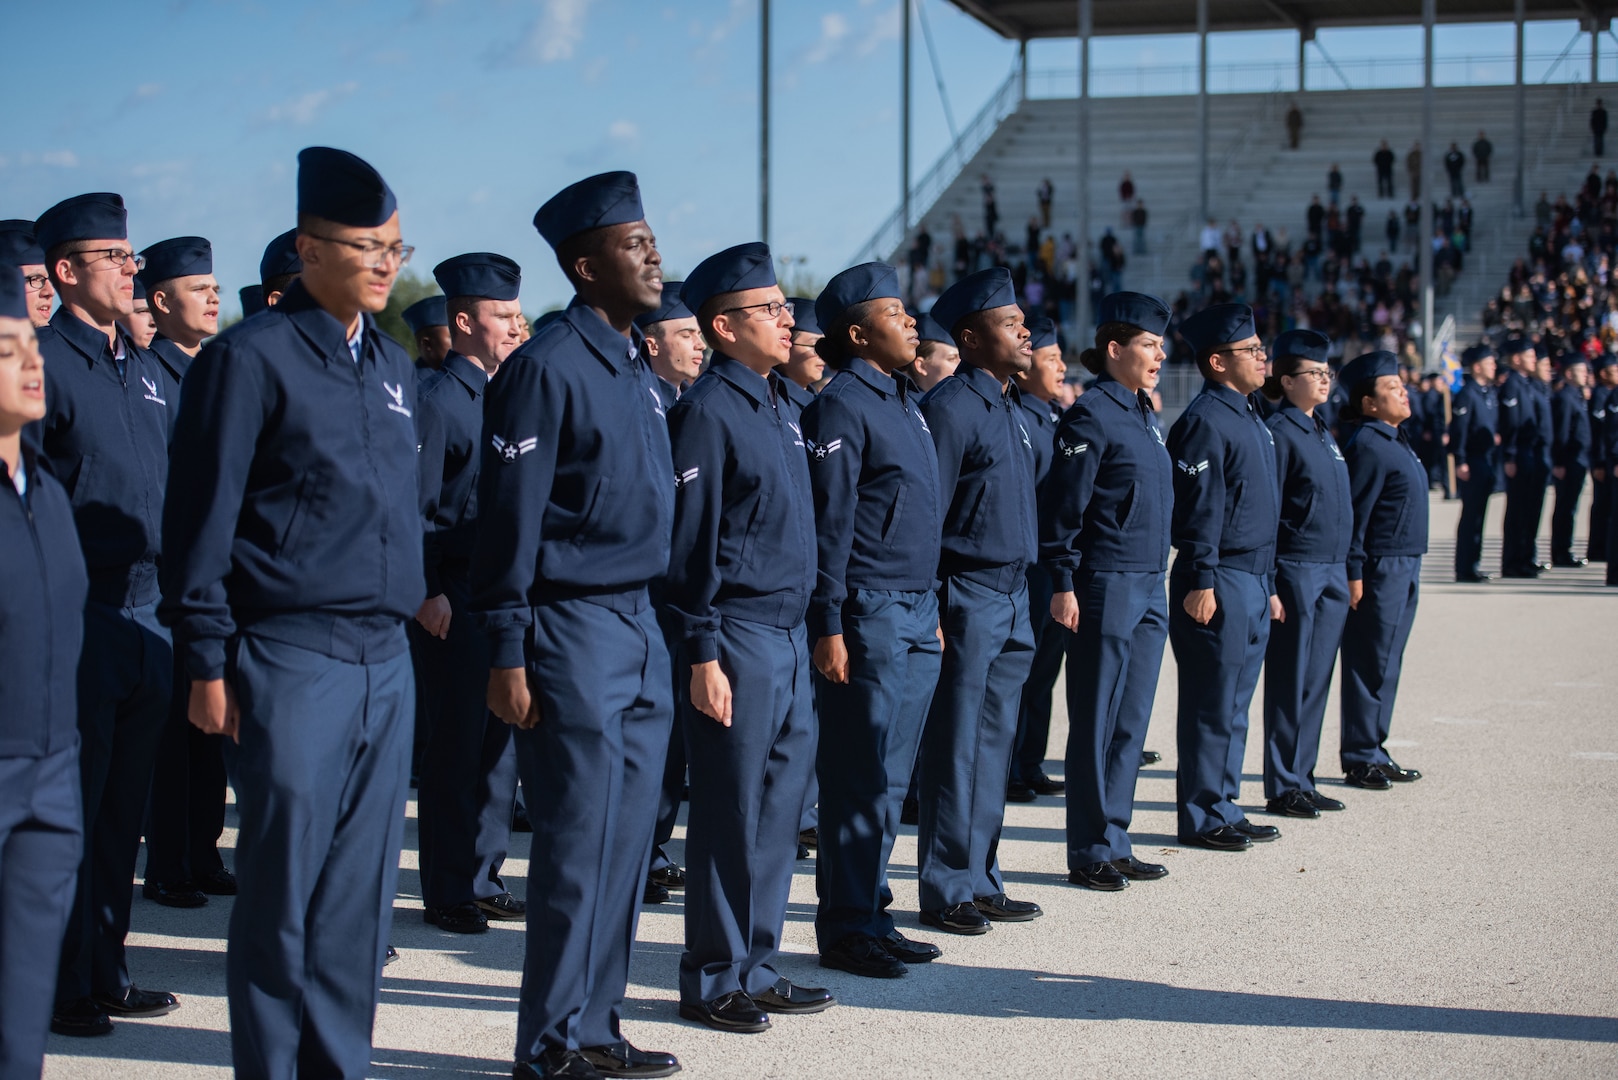 More than 300 Airmen graduate Basic Military Training